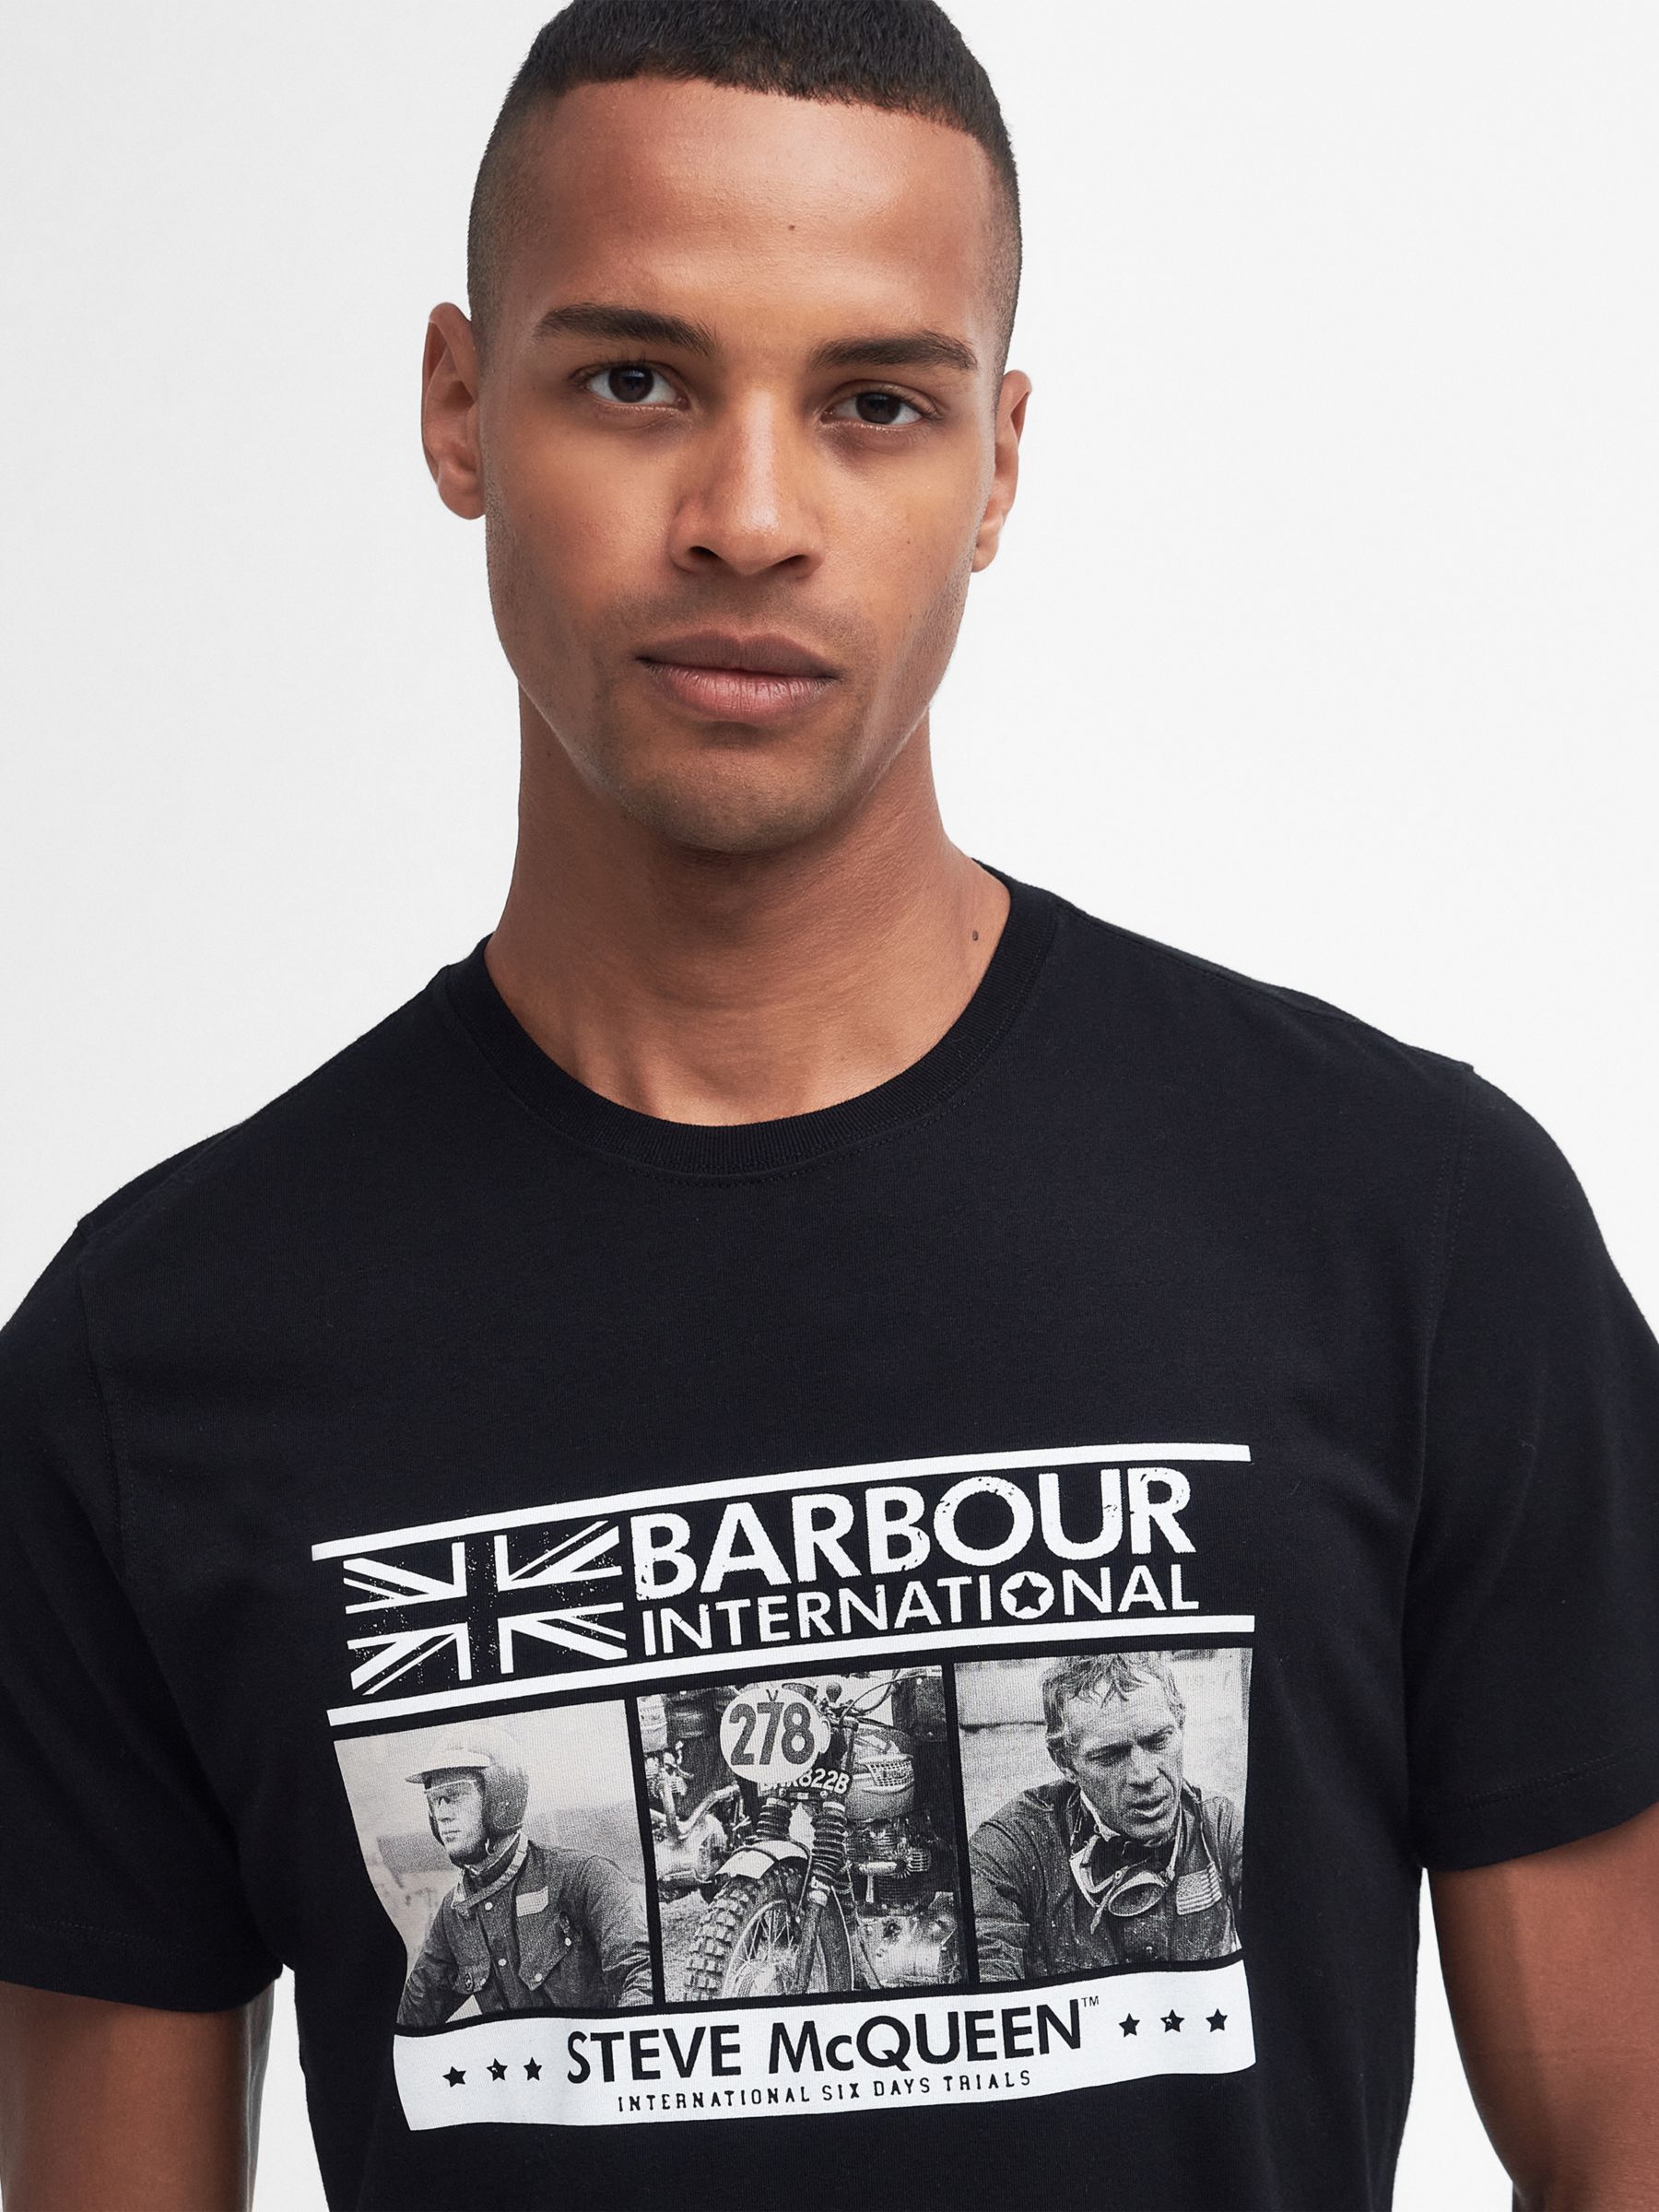 Barbour International Charge Steve McQueen T-Shirt, Black, S